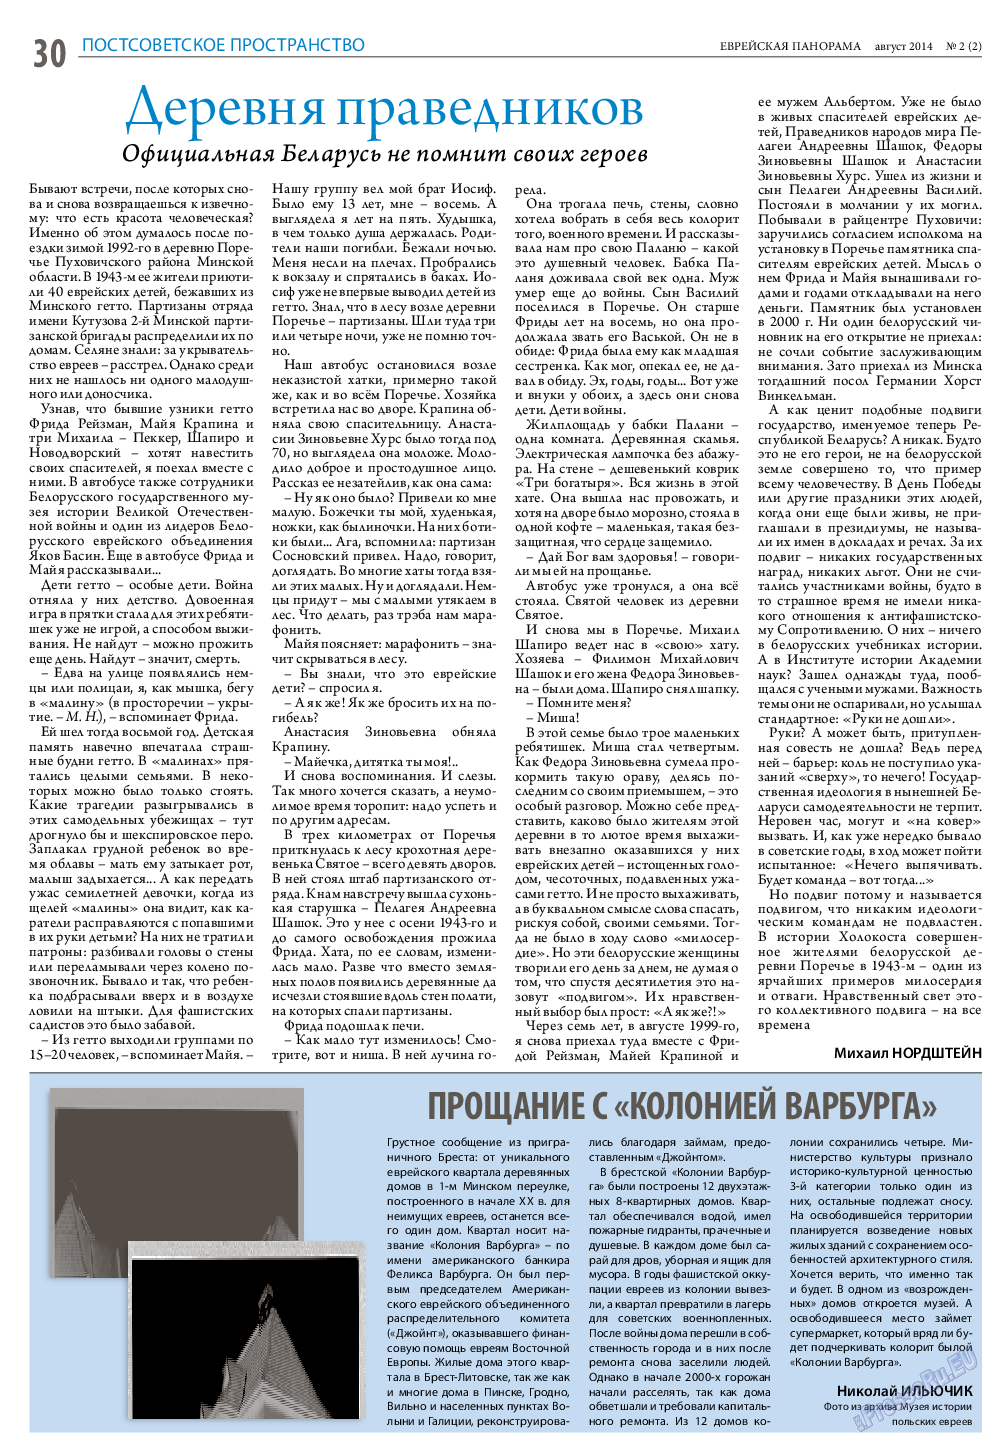 Еврейская панорама, газета. 2014 №2 стр.30